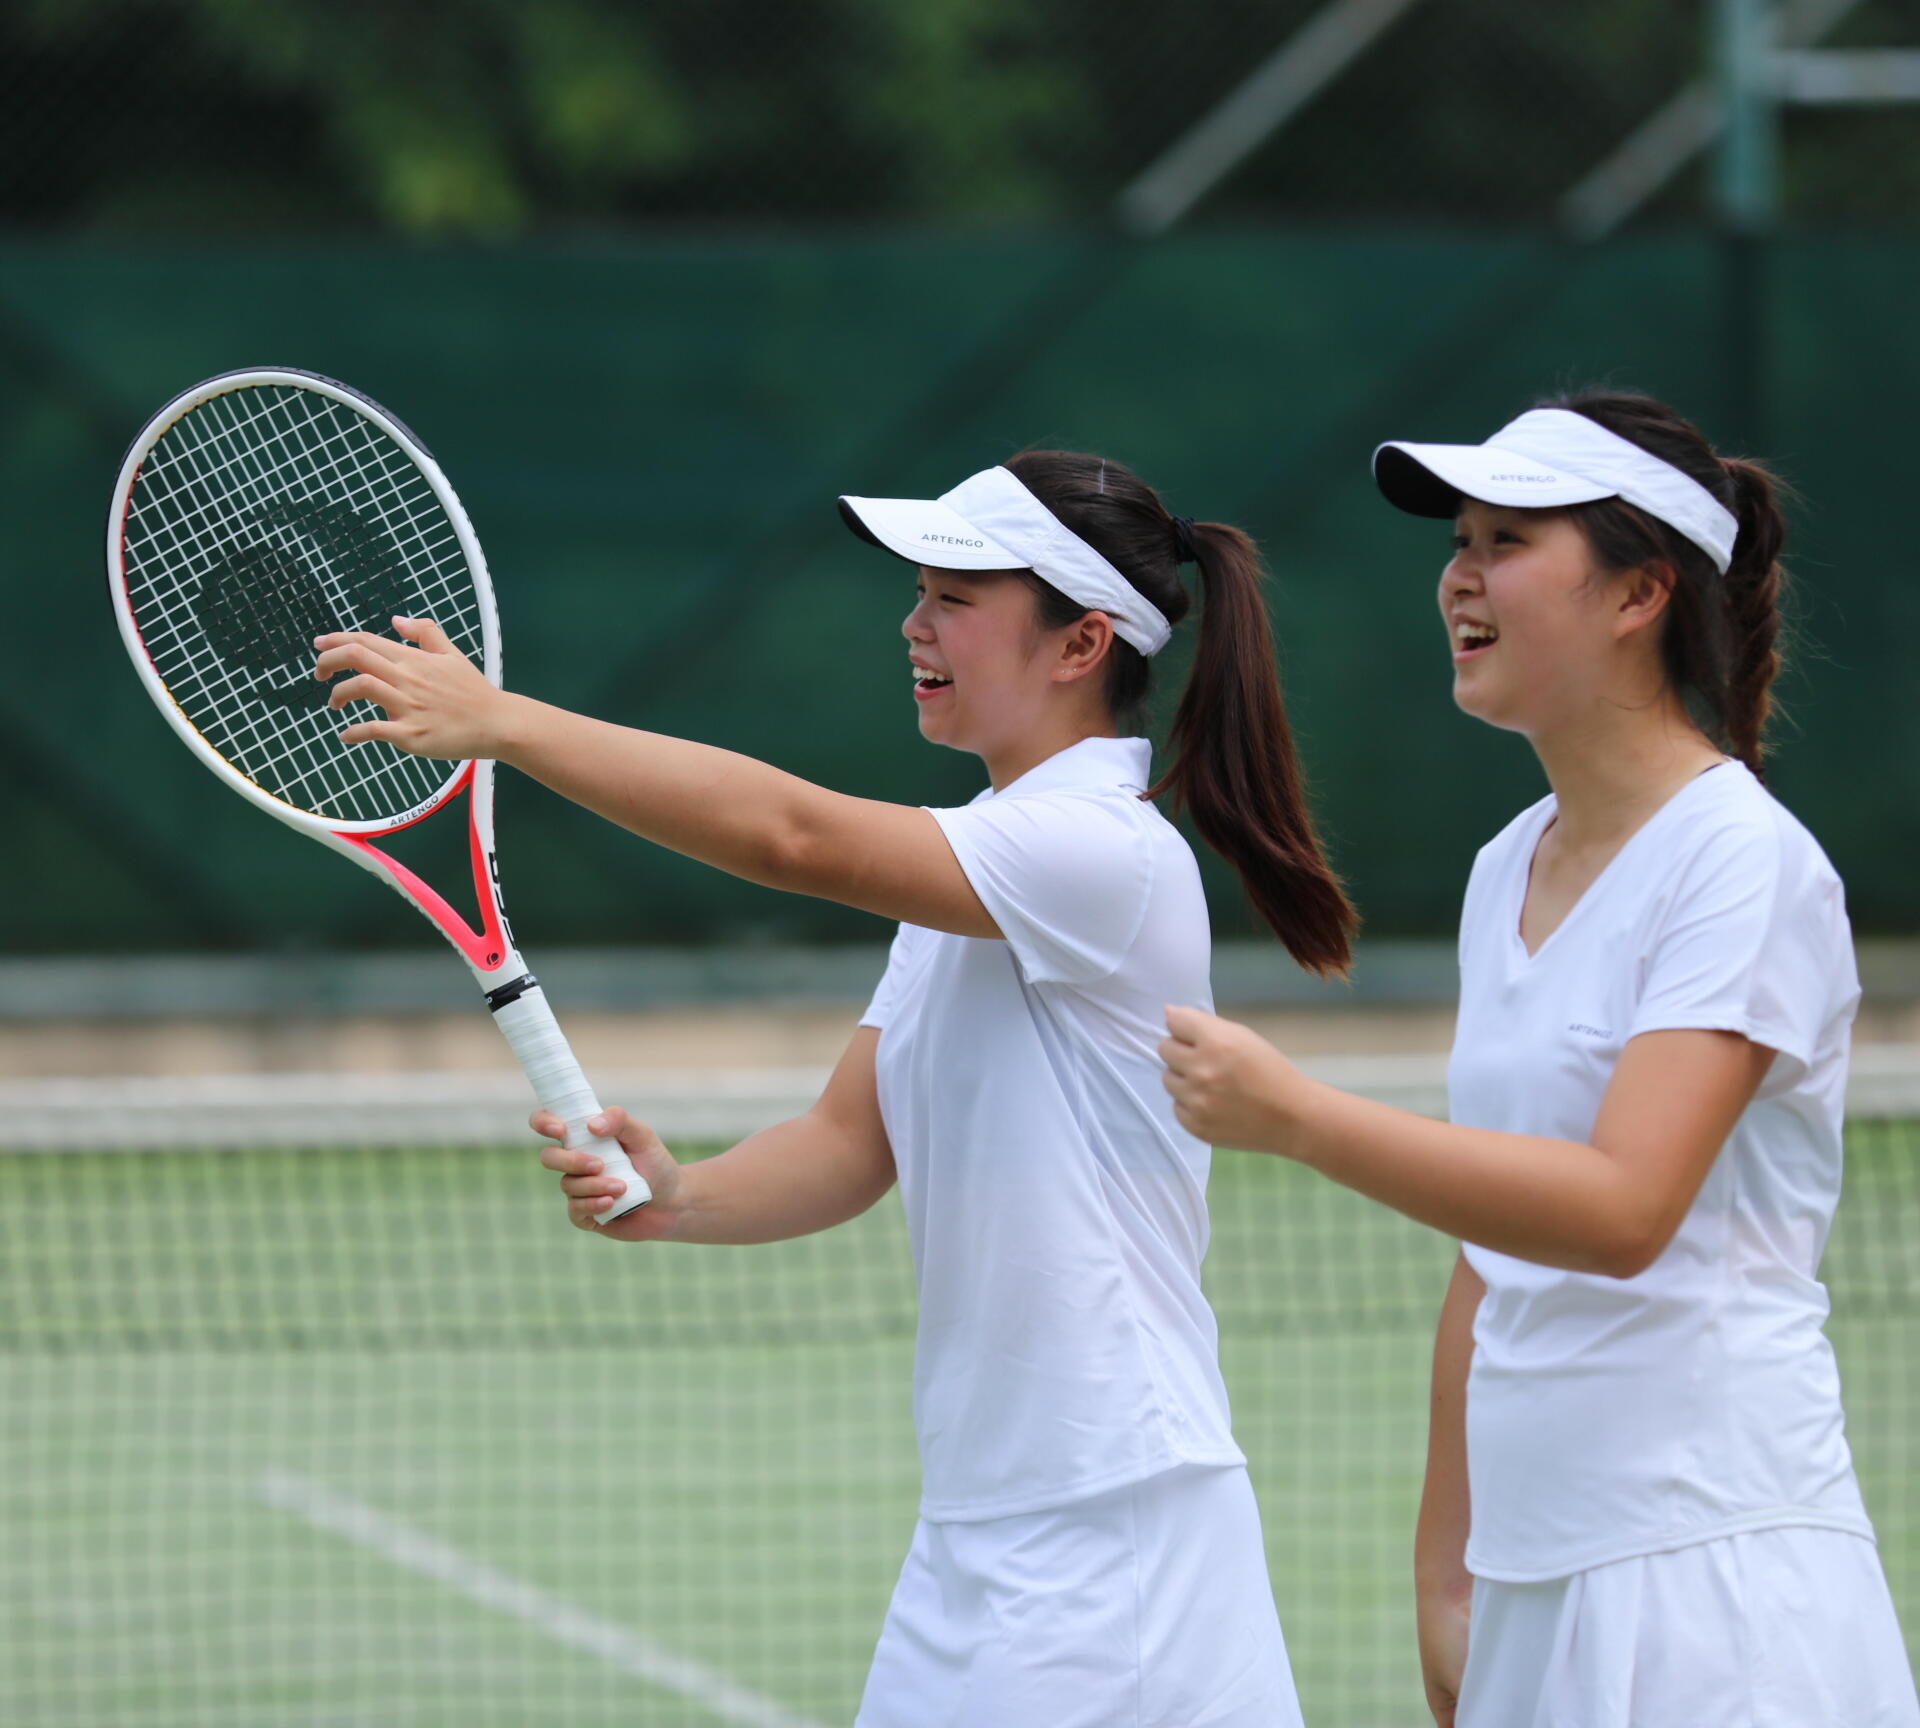 Racket Sports | Your Partner In Tennis | Decathlon Teammate's Story